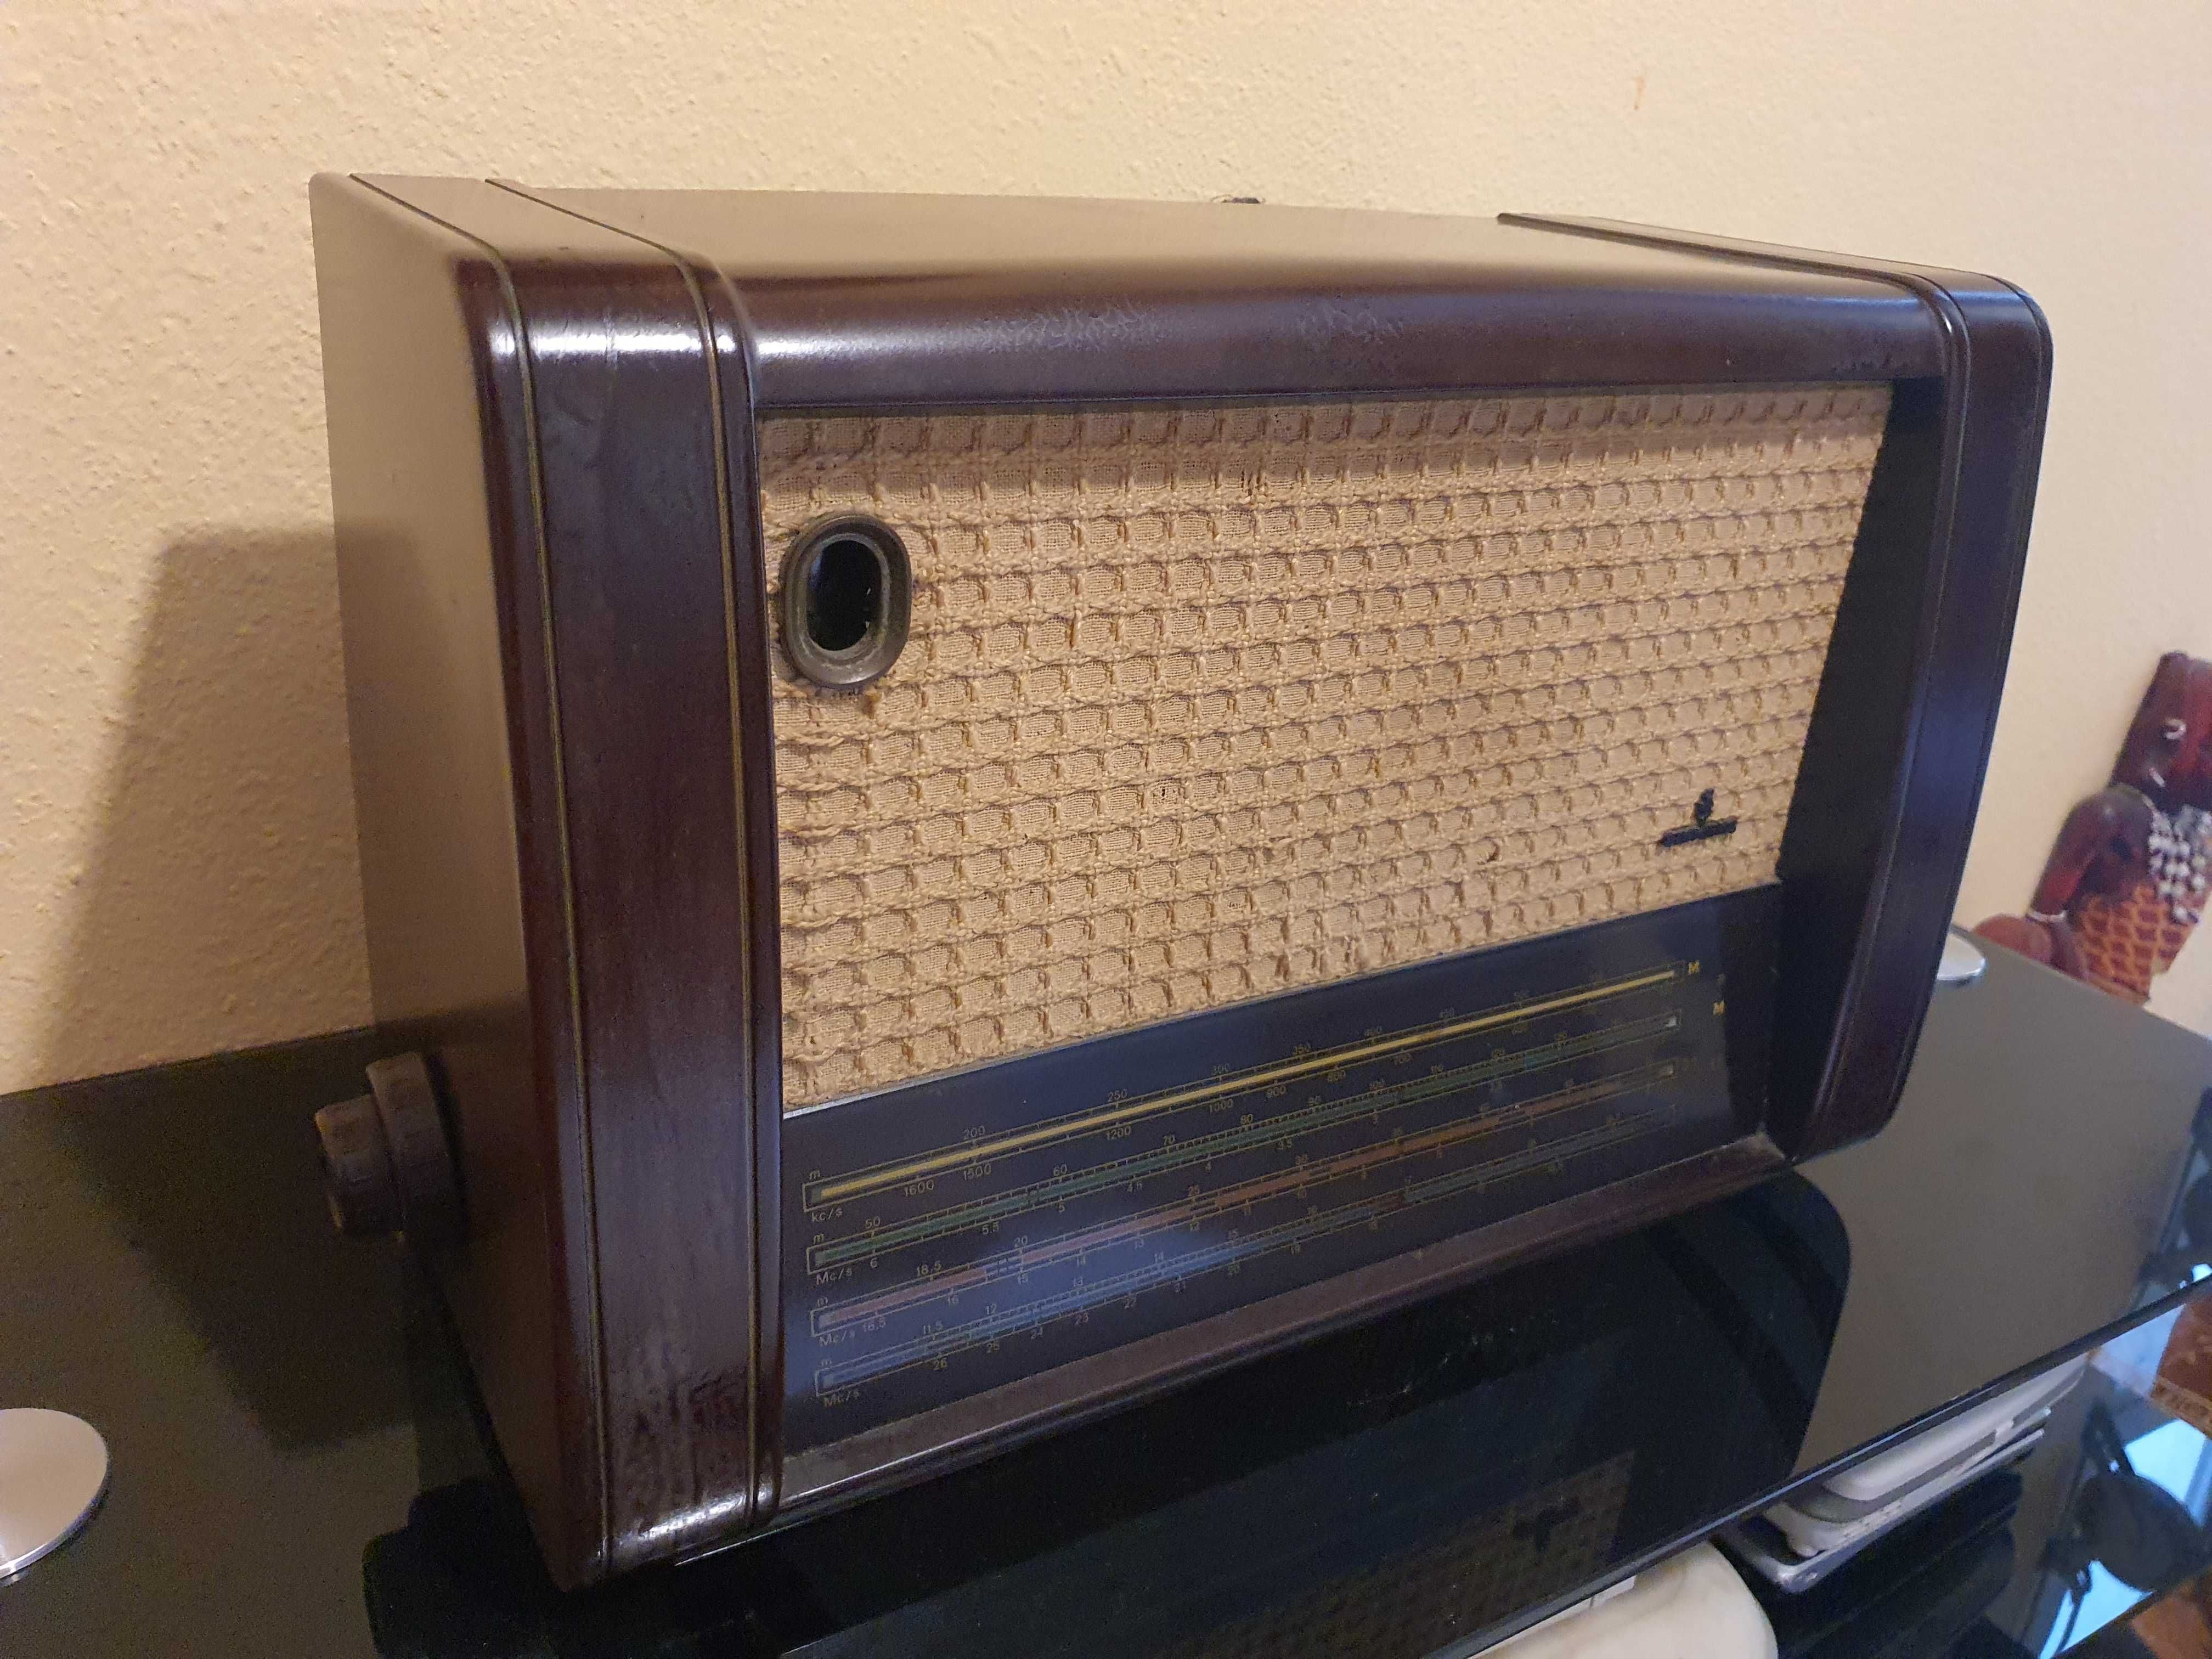 Radio vintage Siemens do ano 1950